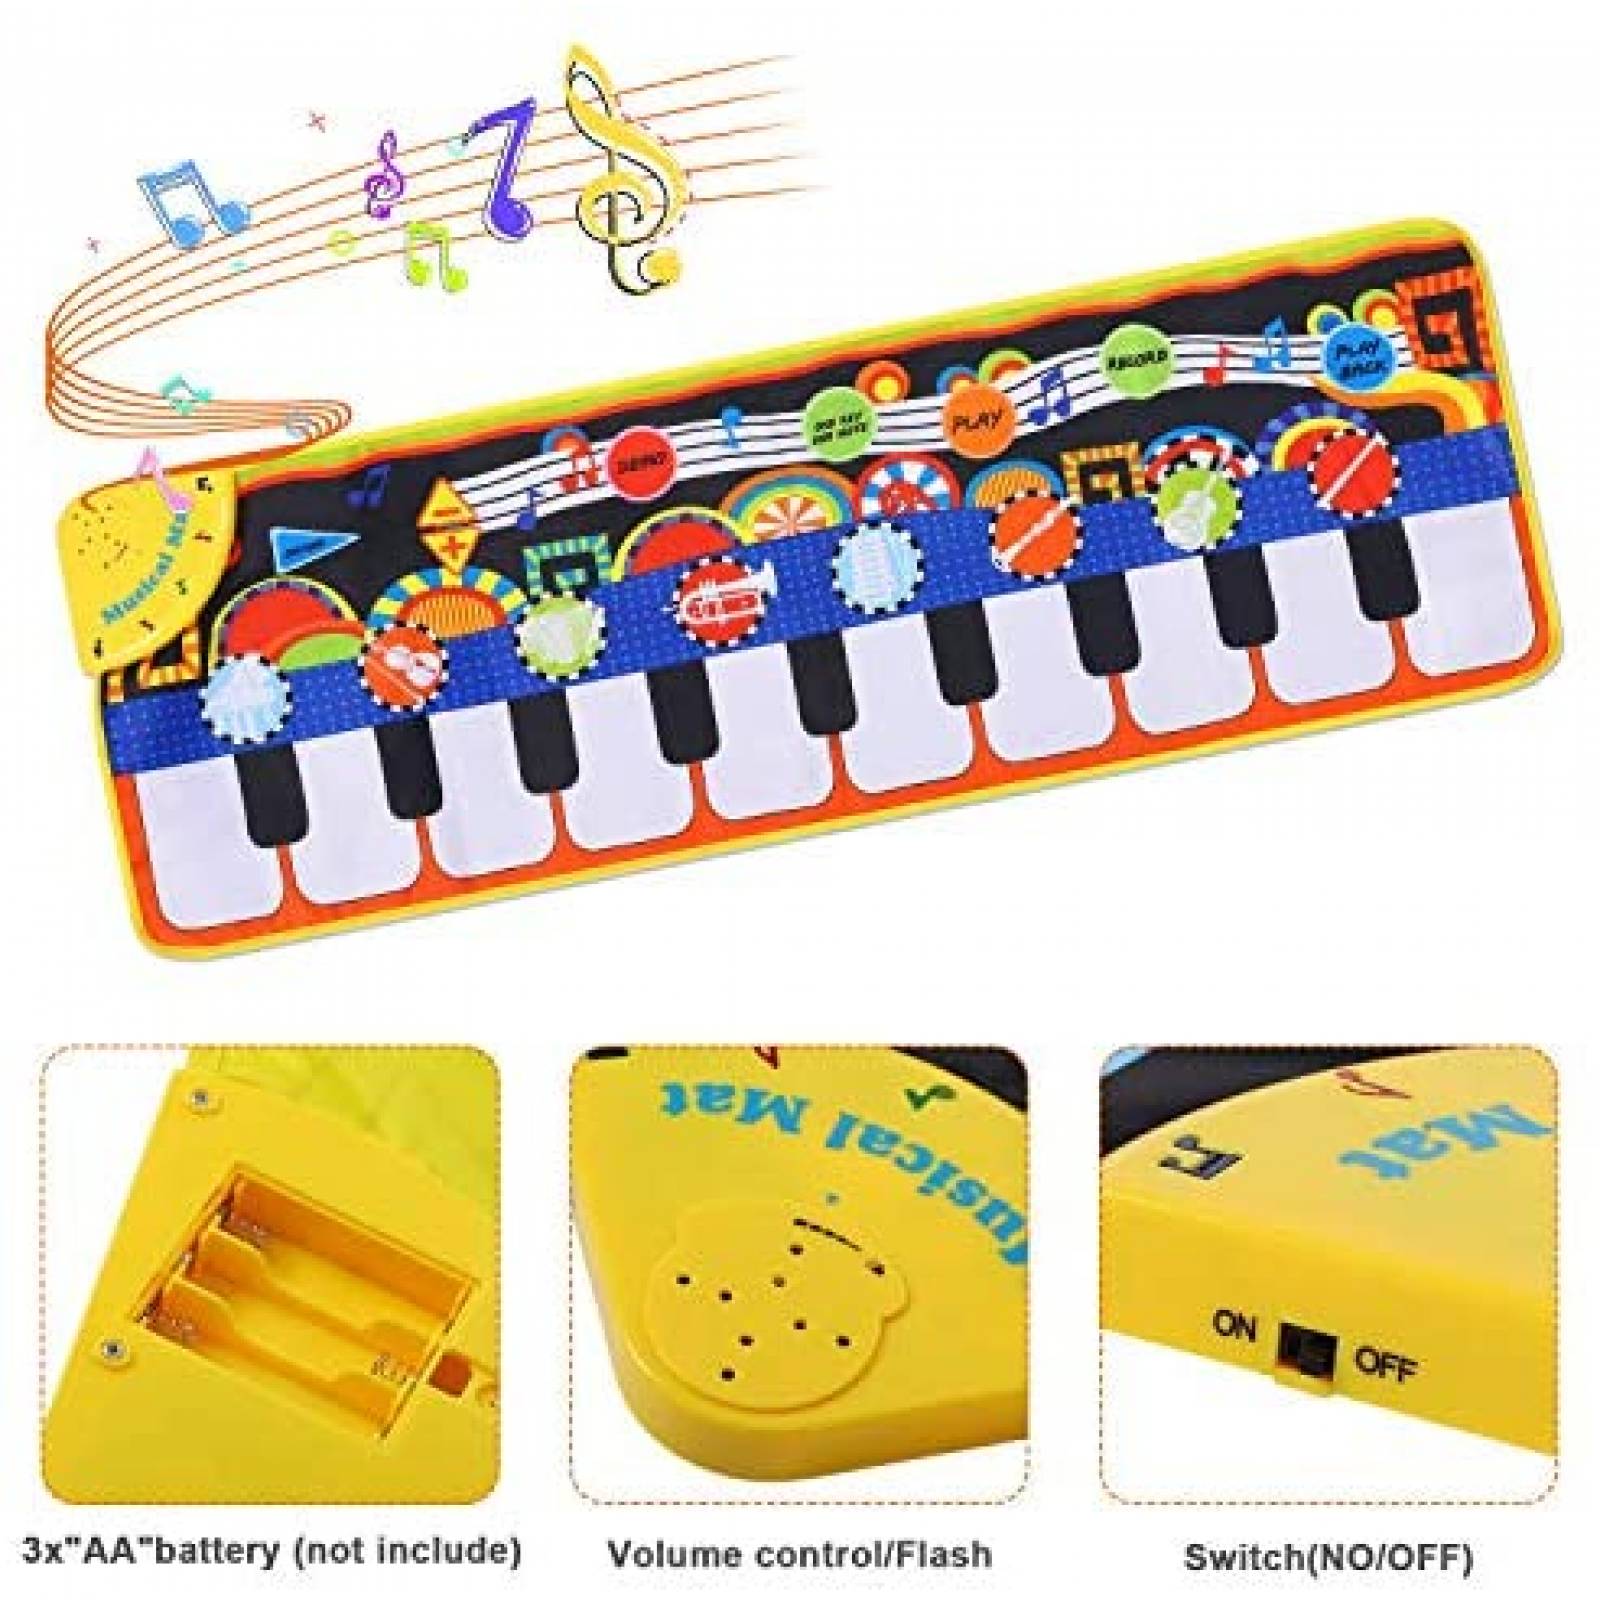 Manta Musical para Niños Cyiecw Piano 43.3 x 14.2''